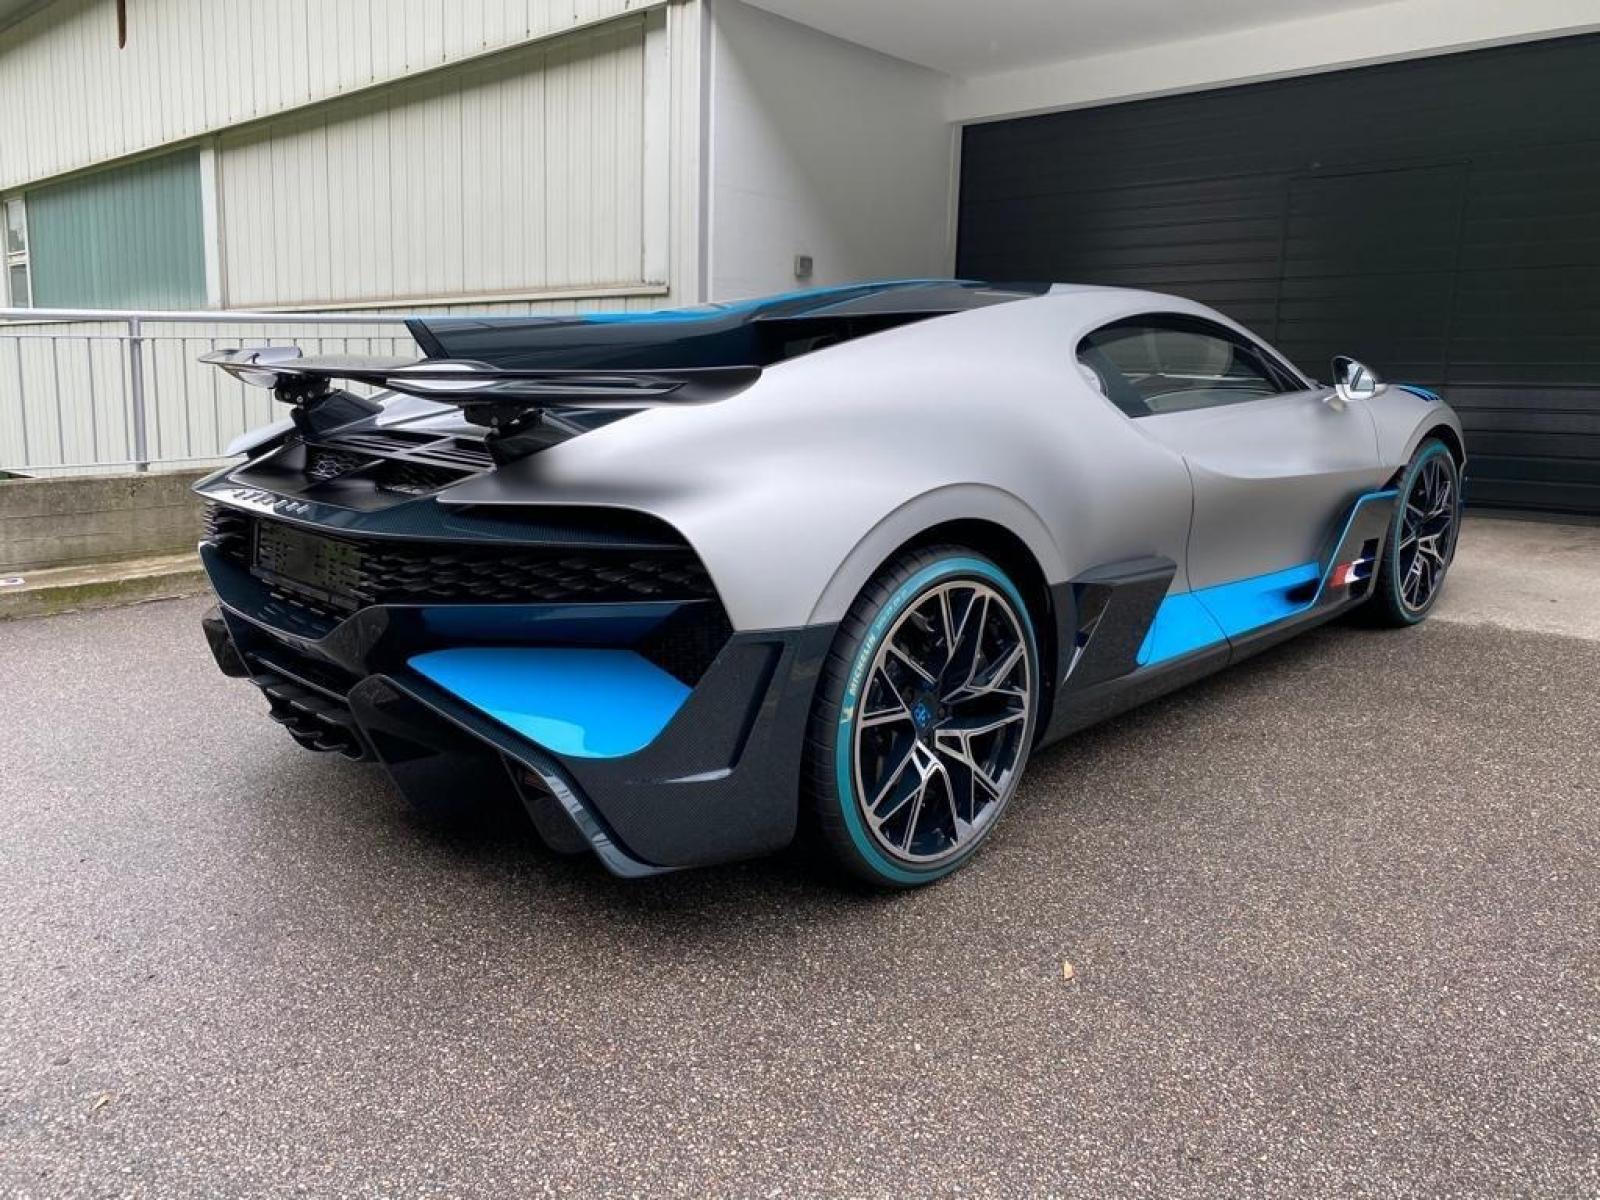 2020 Blue /Gray Bugatti Divo , 0.000000, 0.000000 - BUGATTI DIVO Argent matt / Divo Racing Blue, glossy / Divo Titanium Grey, Int Black / grey Brake caliper: Grey - Photo #3